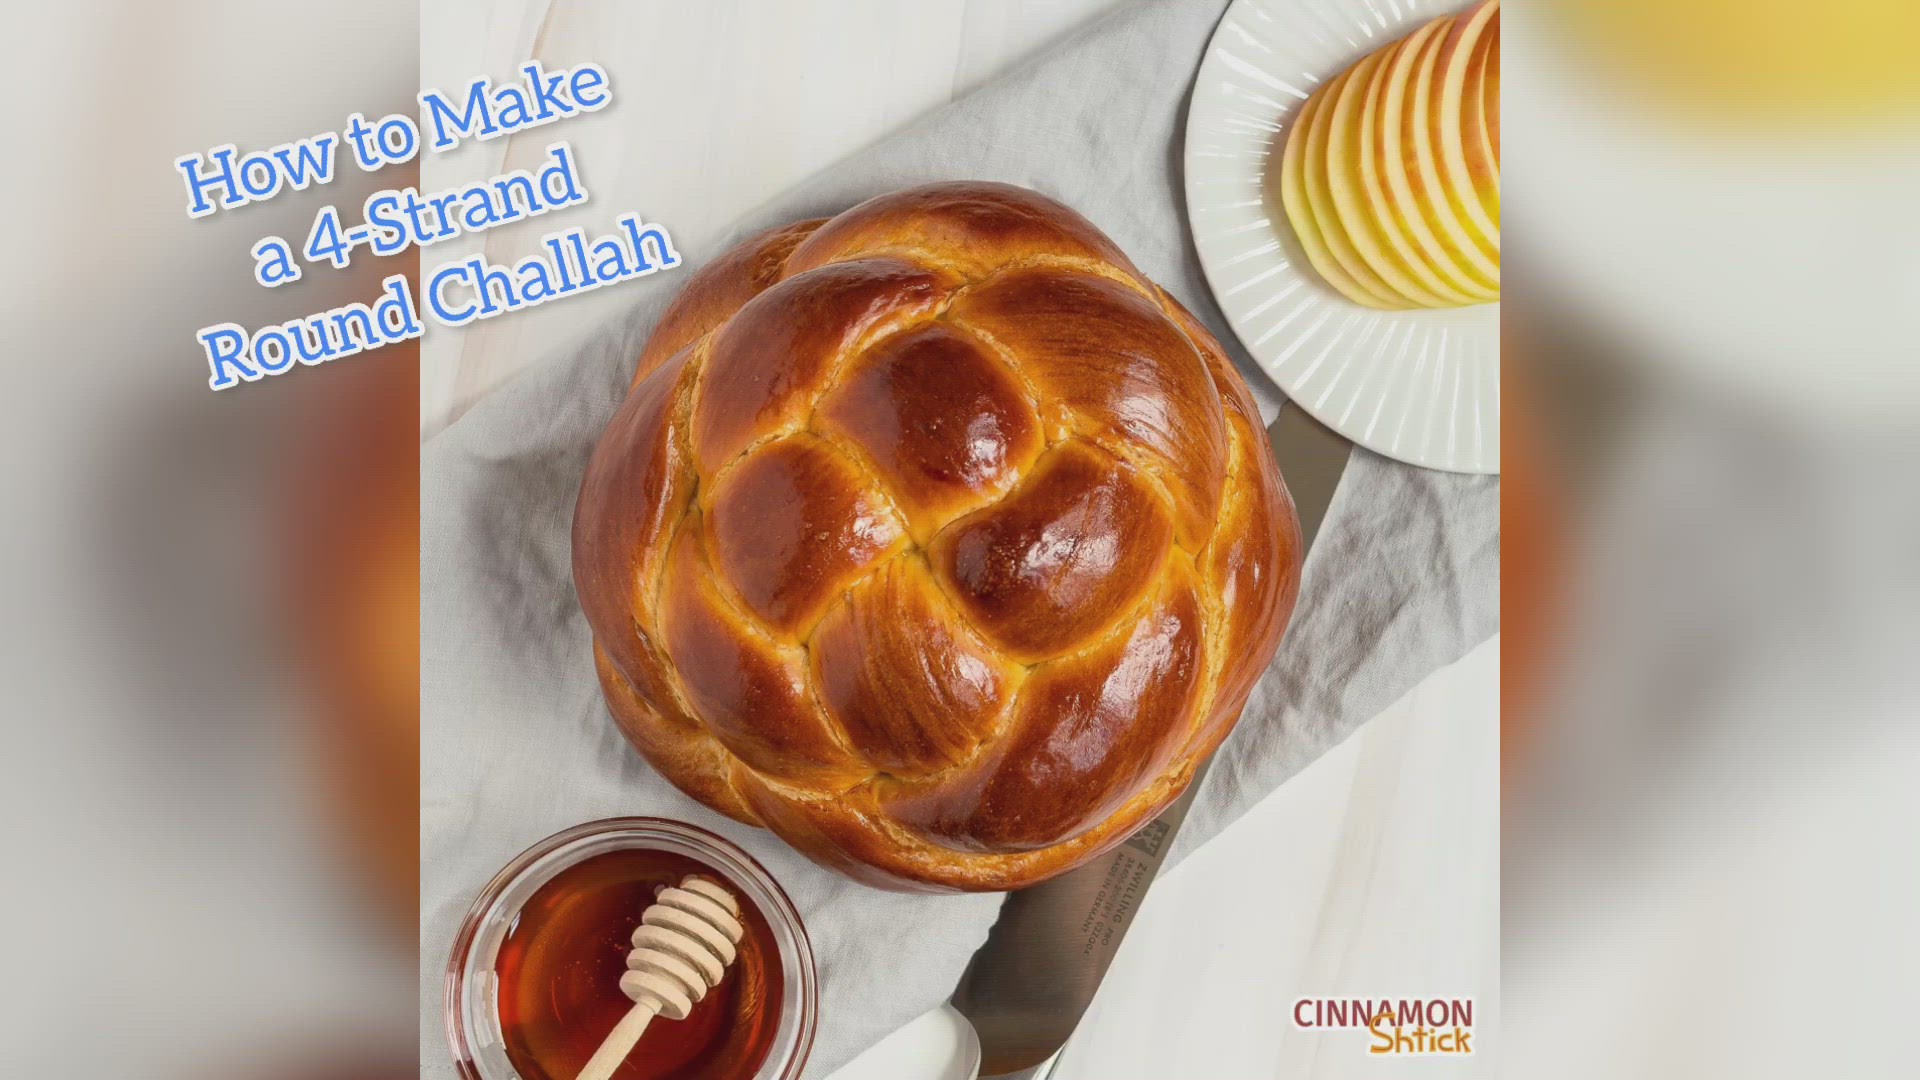 Braided Round Challah Recipe: How to Make It